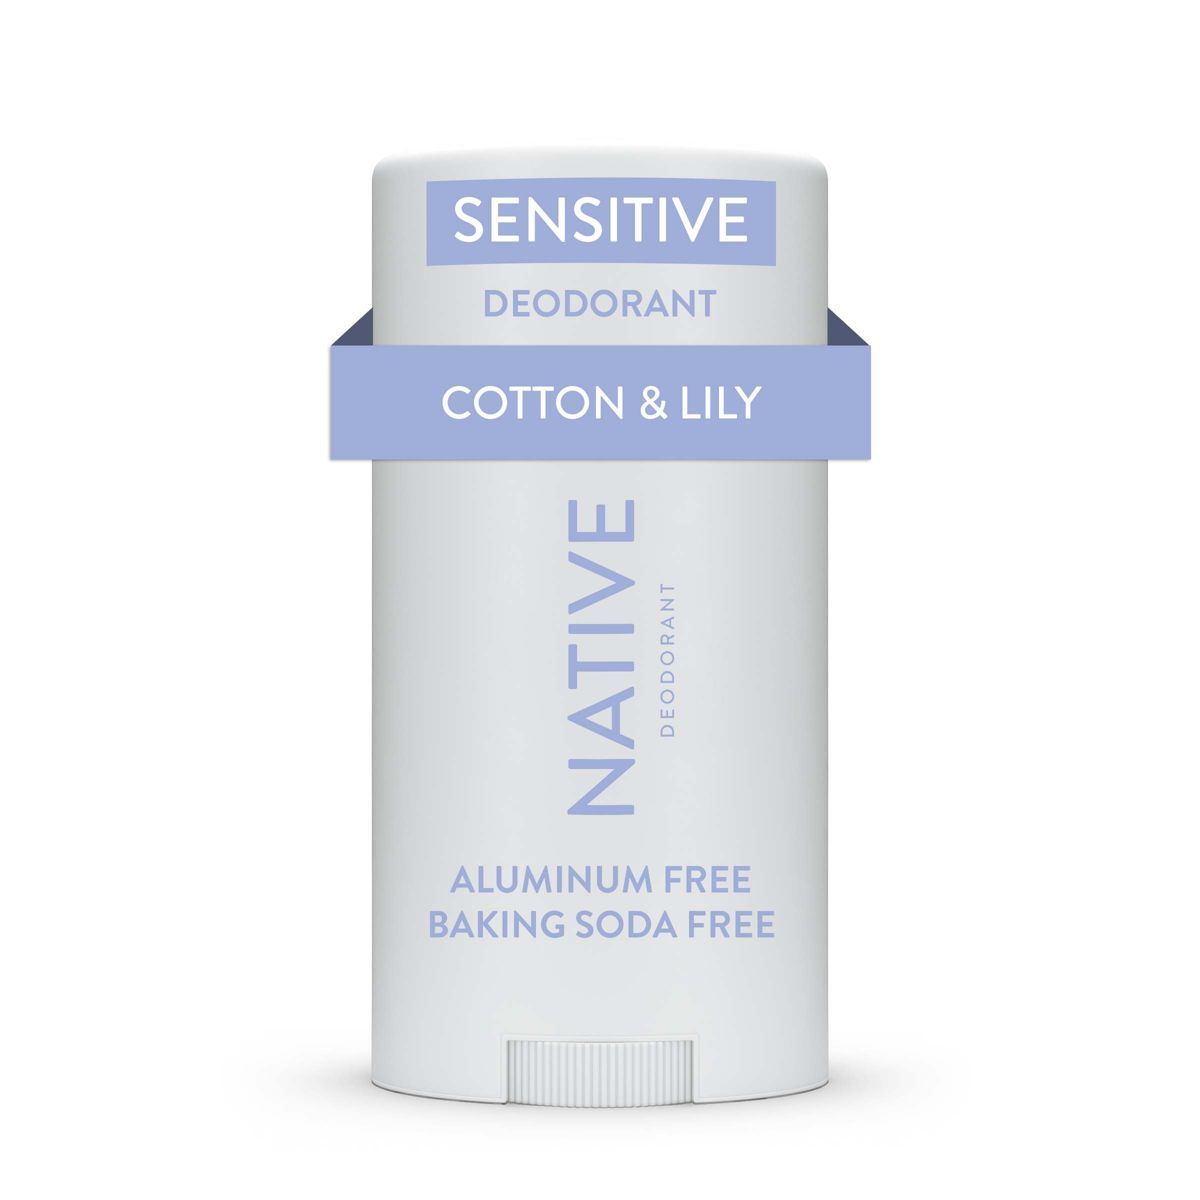 Native Sensitive Deodorant - Cotton & Lily - No Baking Soda - 2.65 oz | Target